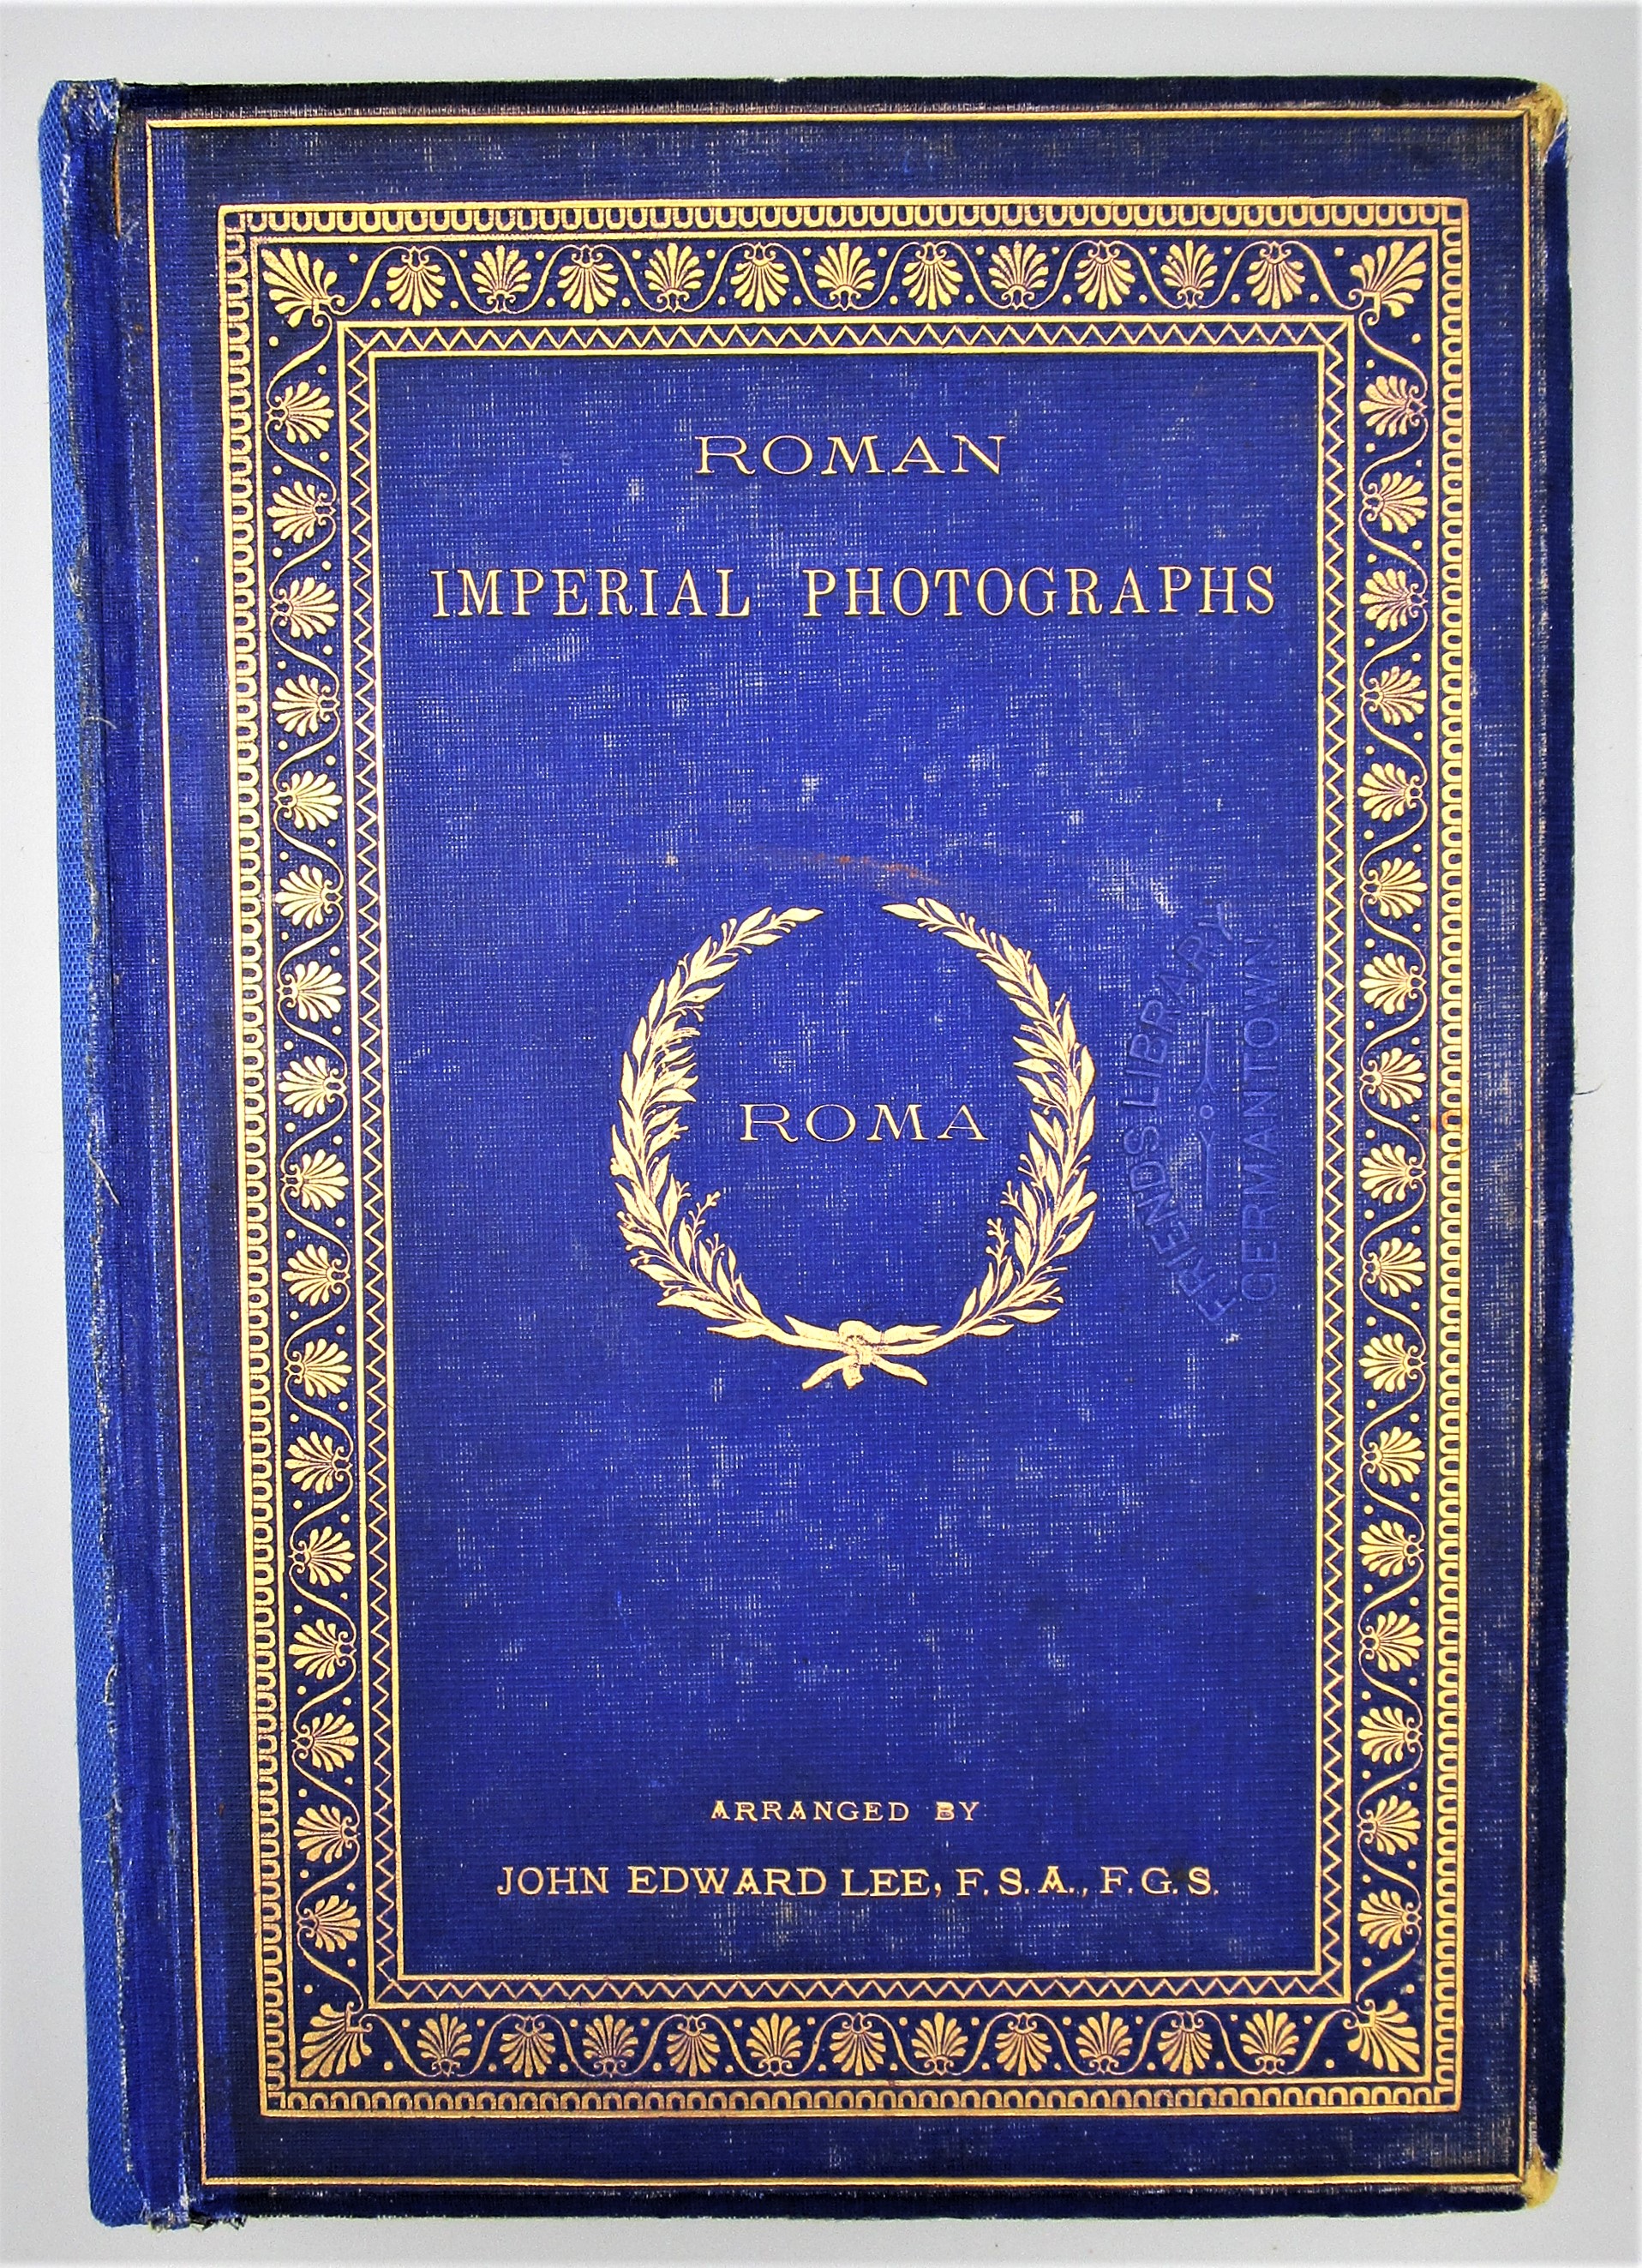 ROMAN IMPERIAL PHOTOGRAPHS, by John Edward Lee - 1874 [1st Ltd Ed]